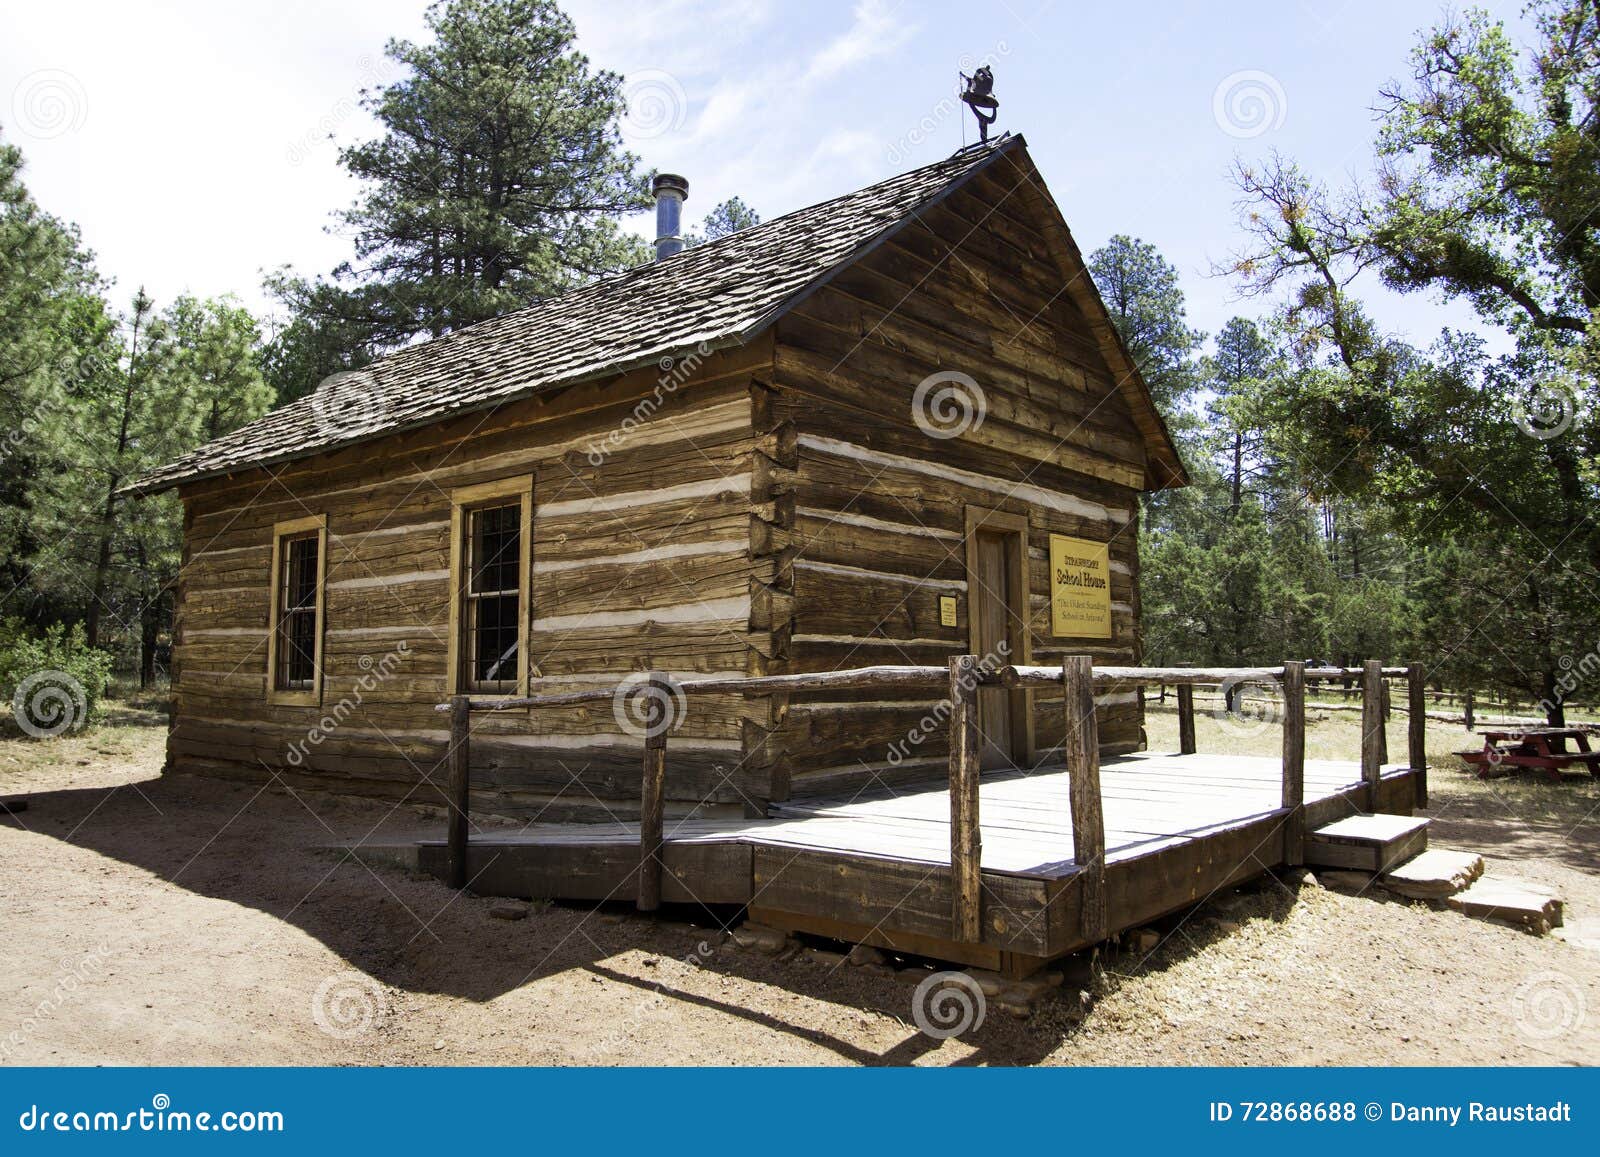 oldest standing schoolhouse in arizona